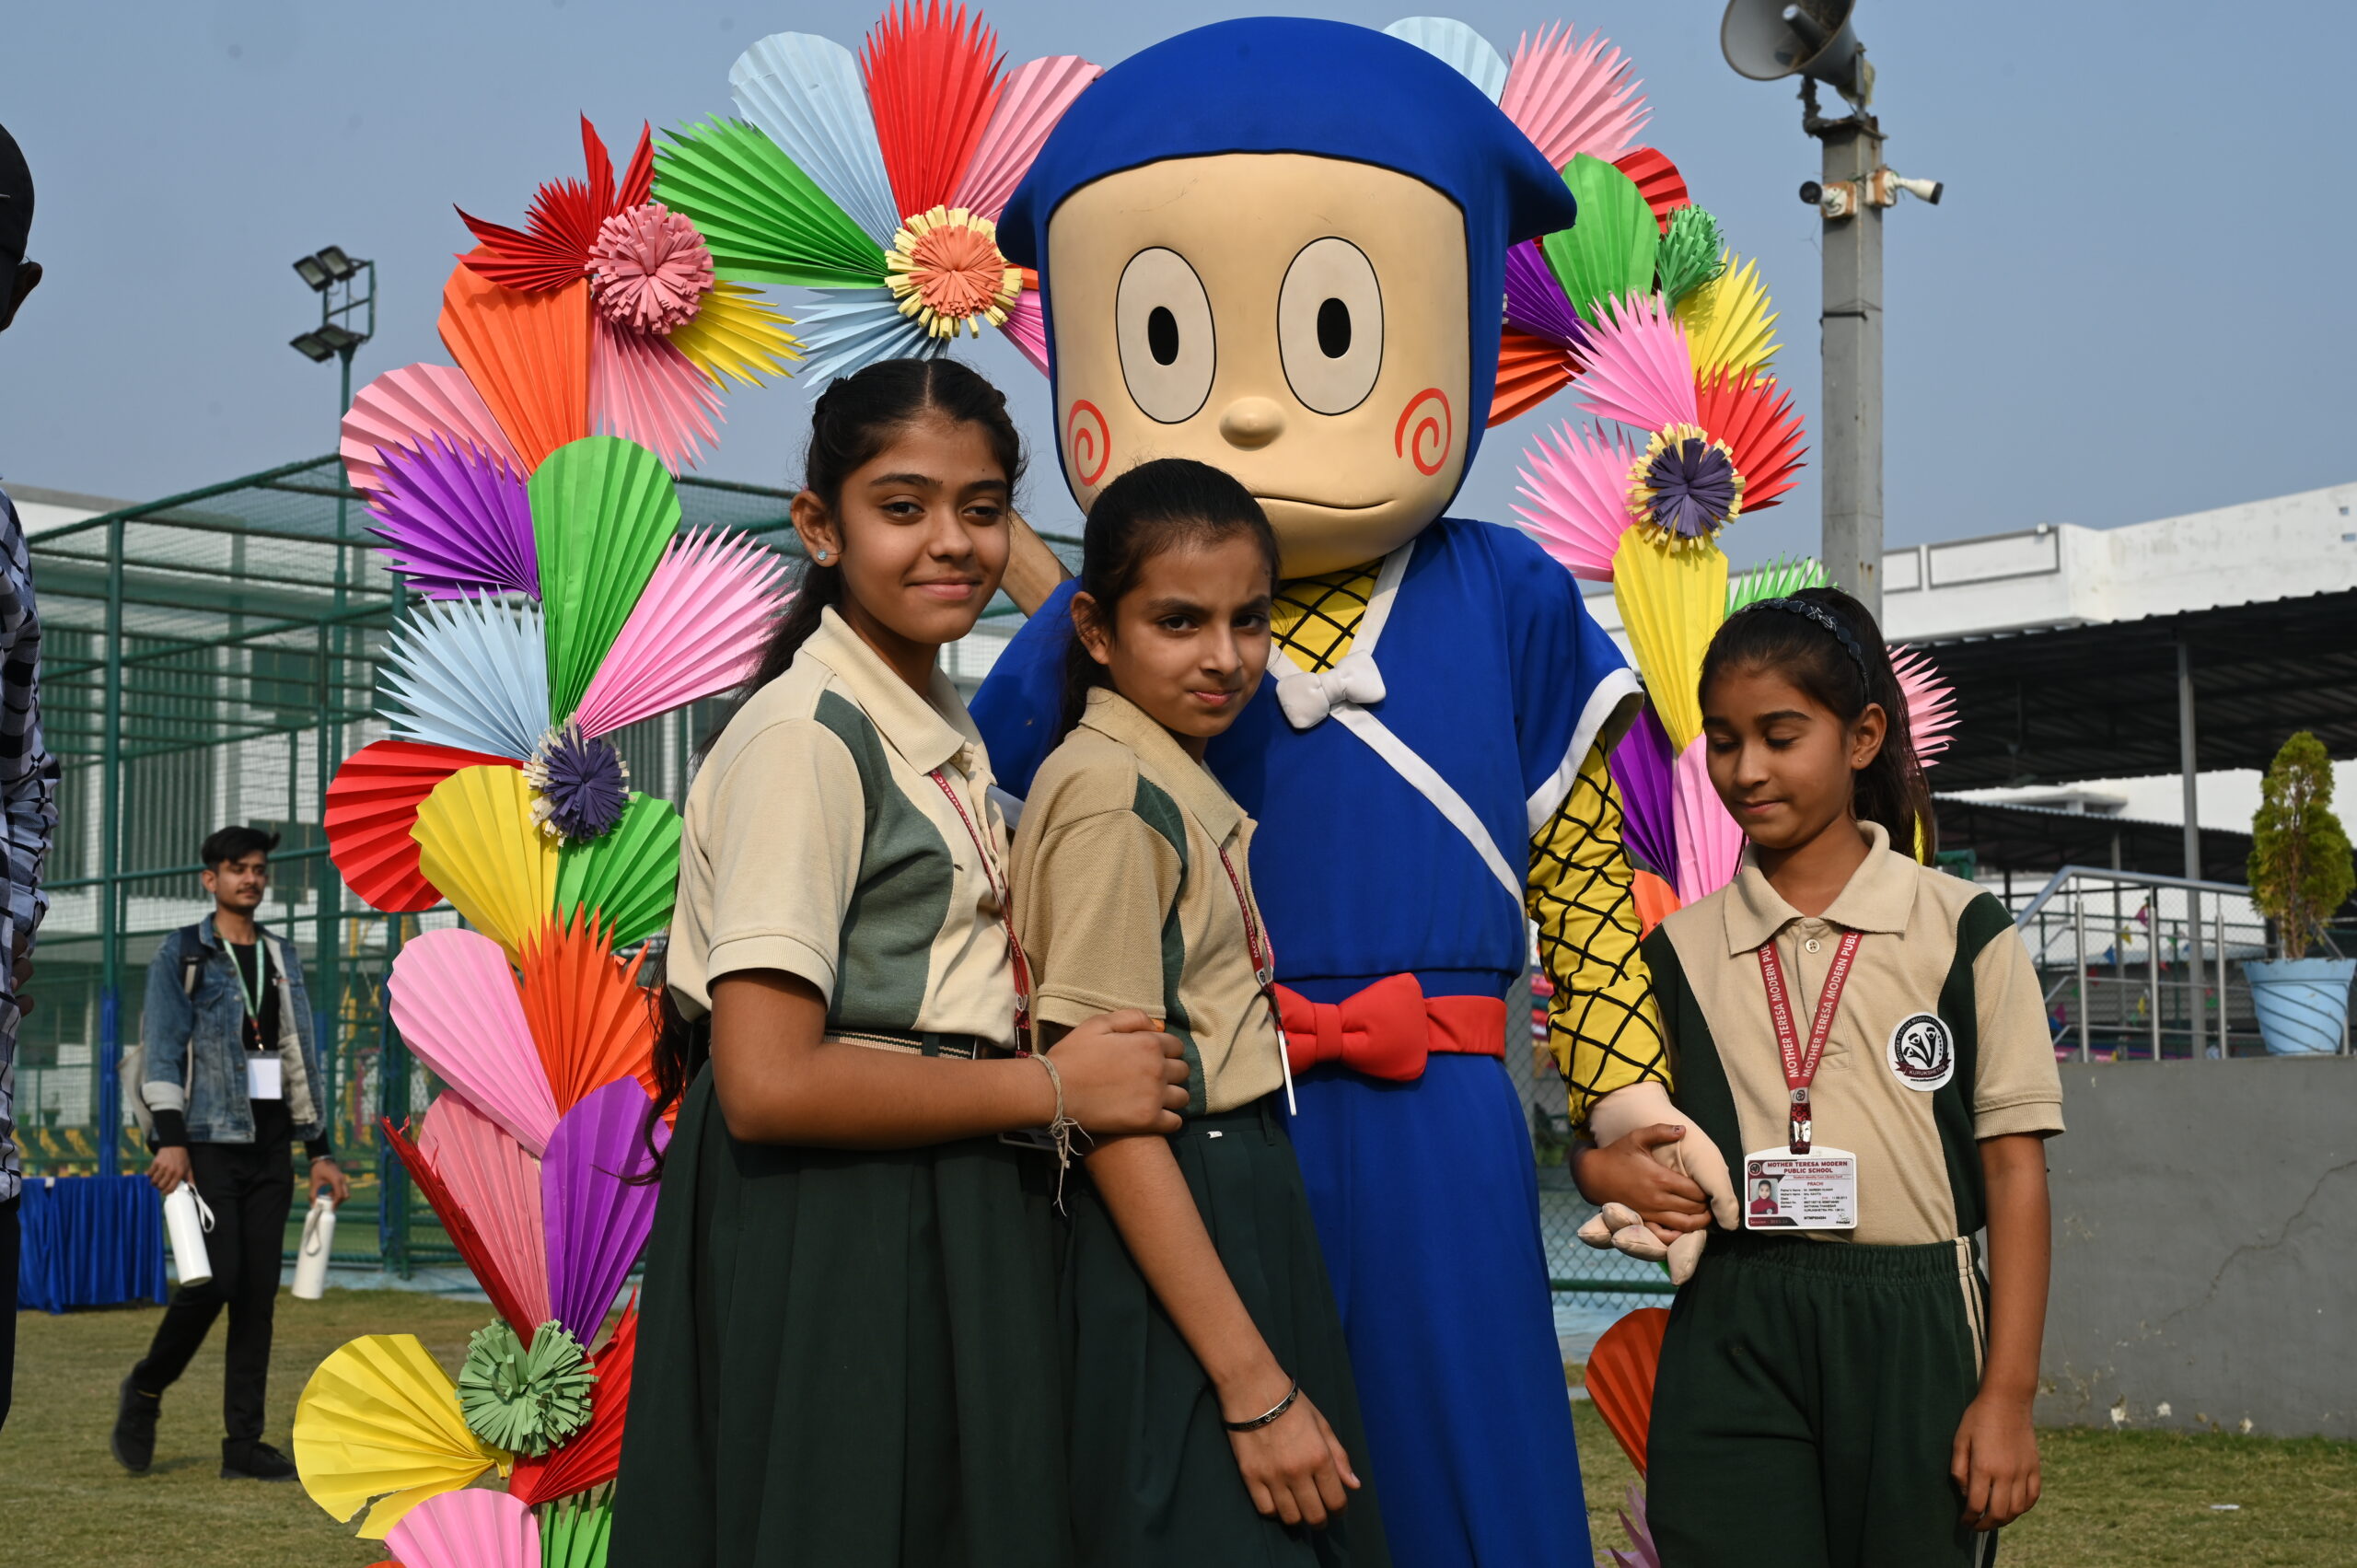 Mother Teresa Modern Public School Kurukshetra - KALATHON - 04-12-2023